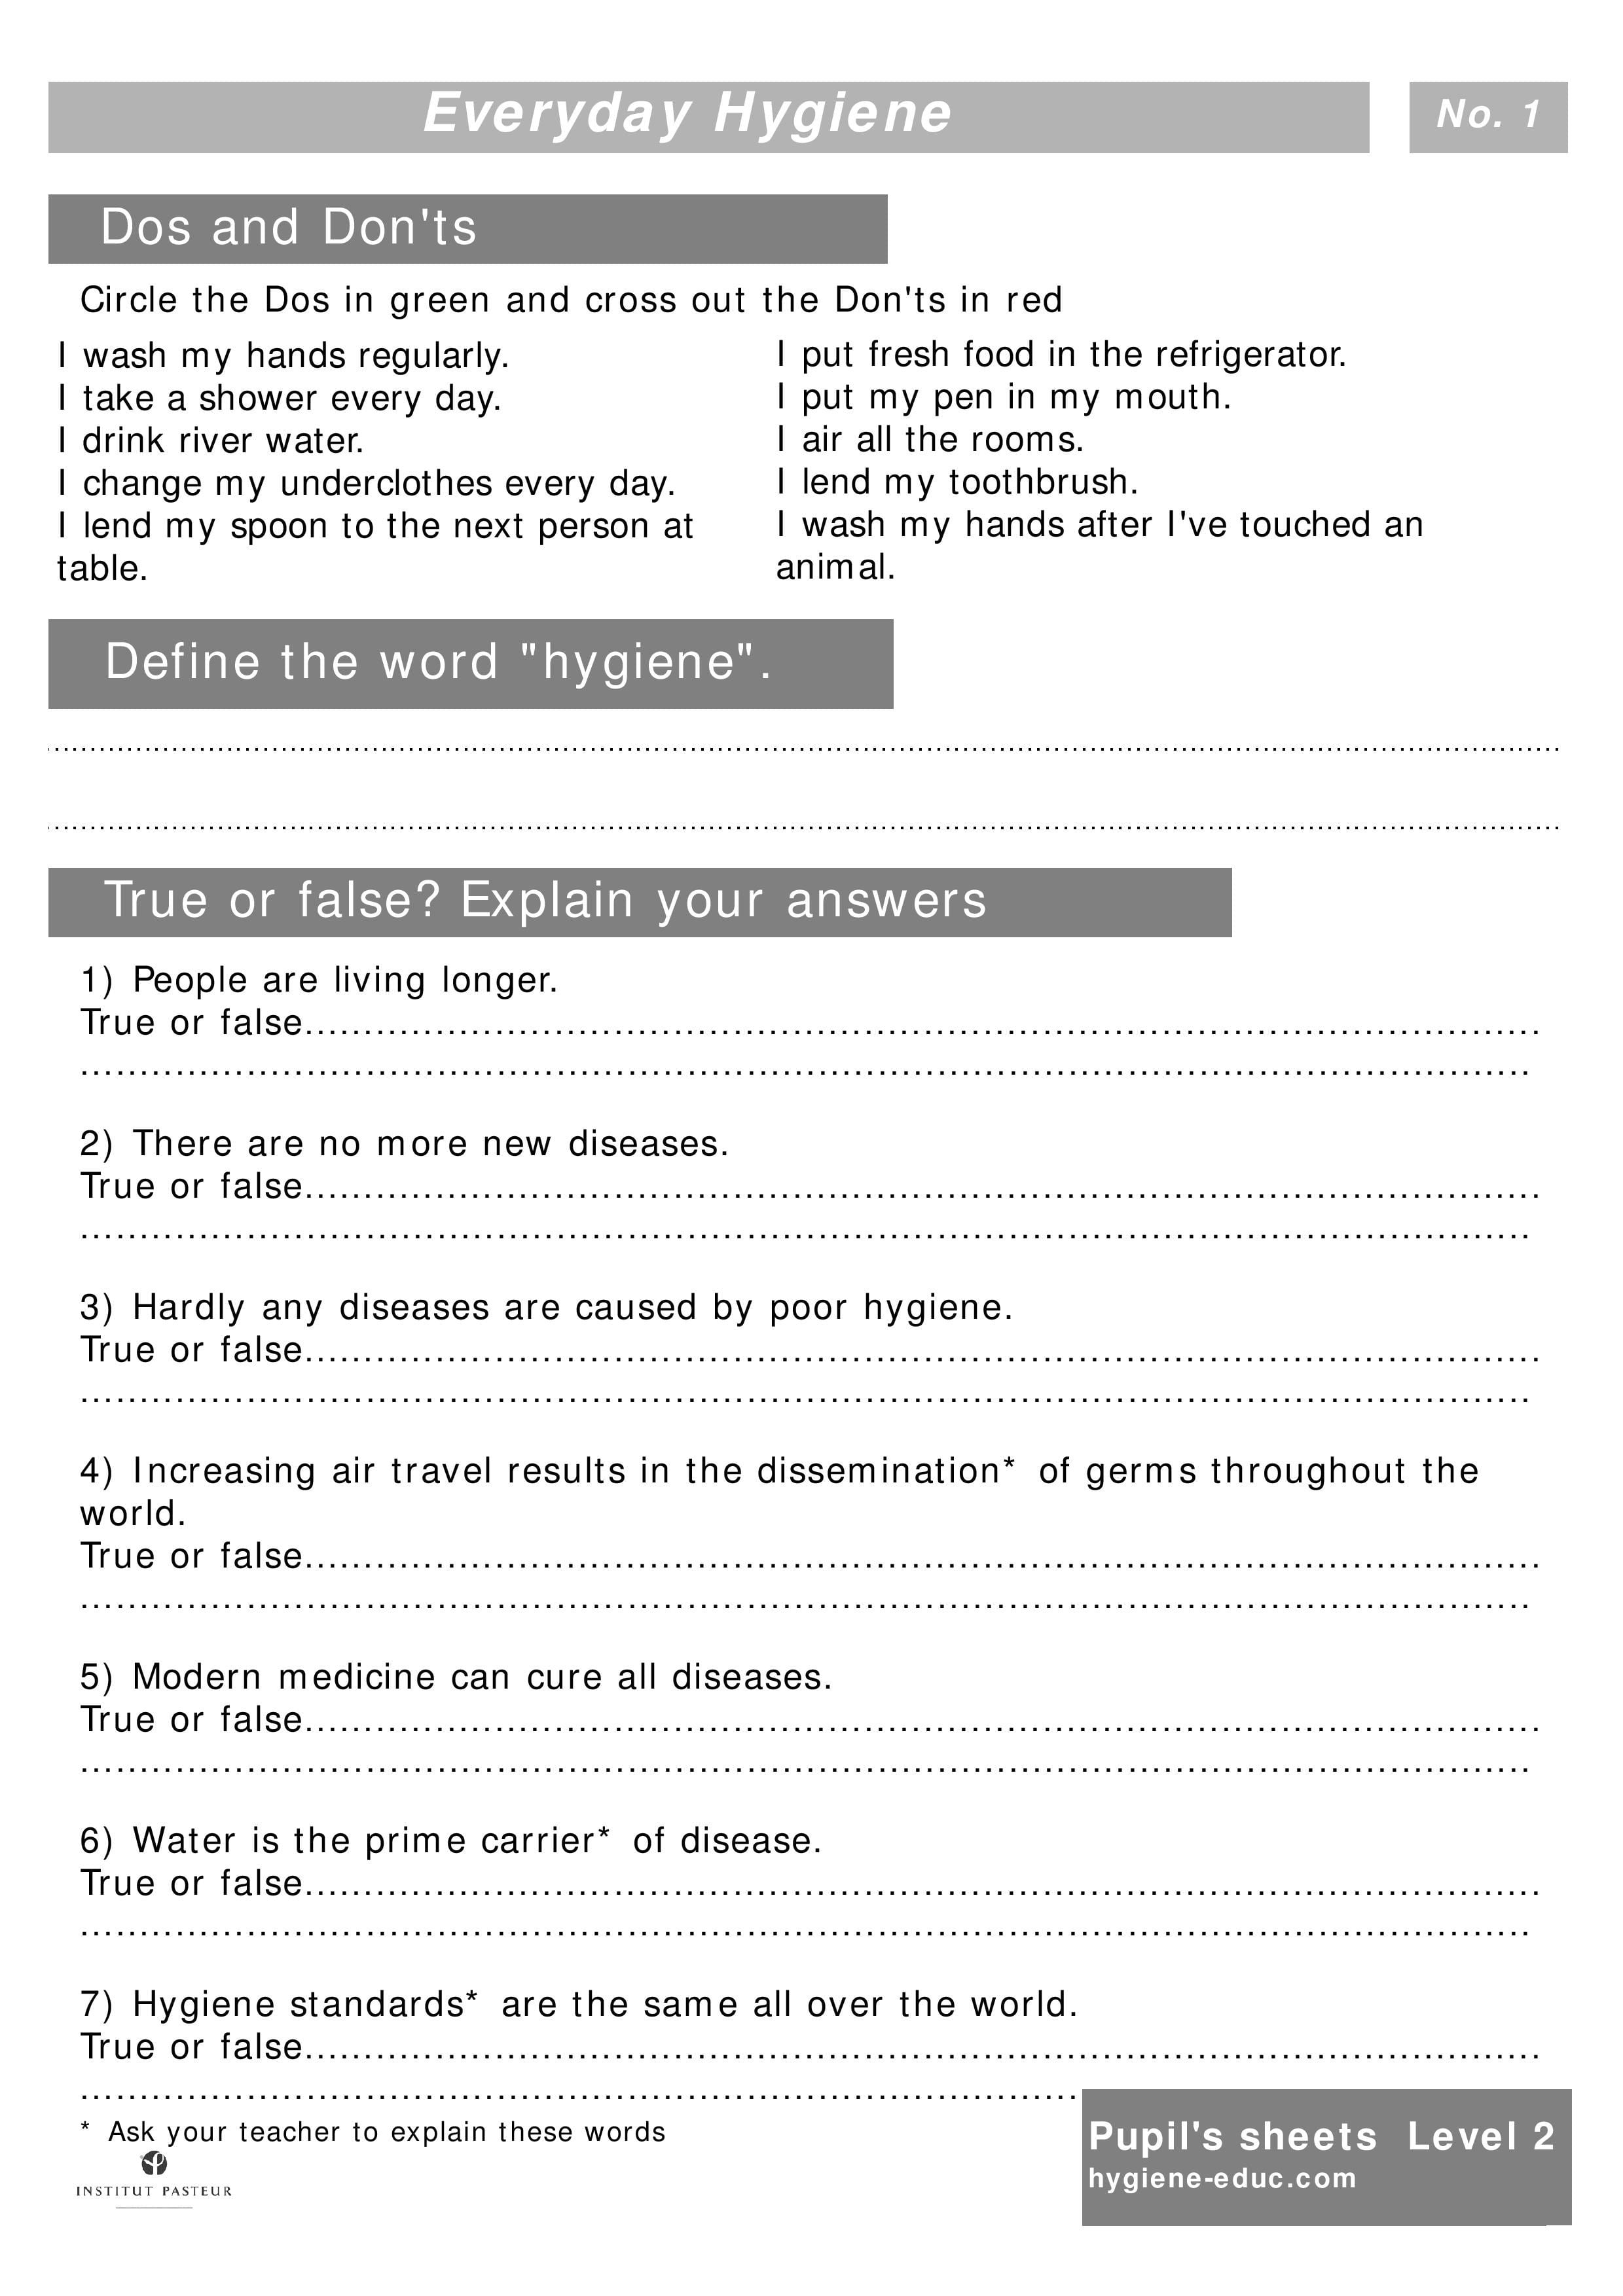 Everyday Hygiene Worksheets For Kids Level 2  Personal Hygiene